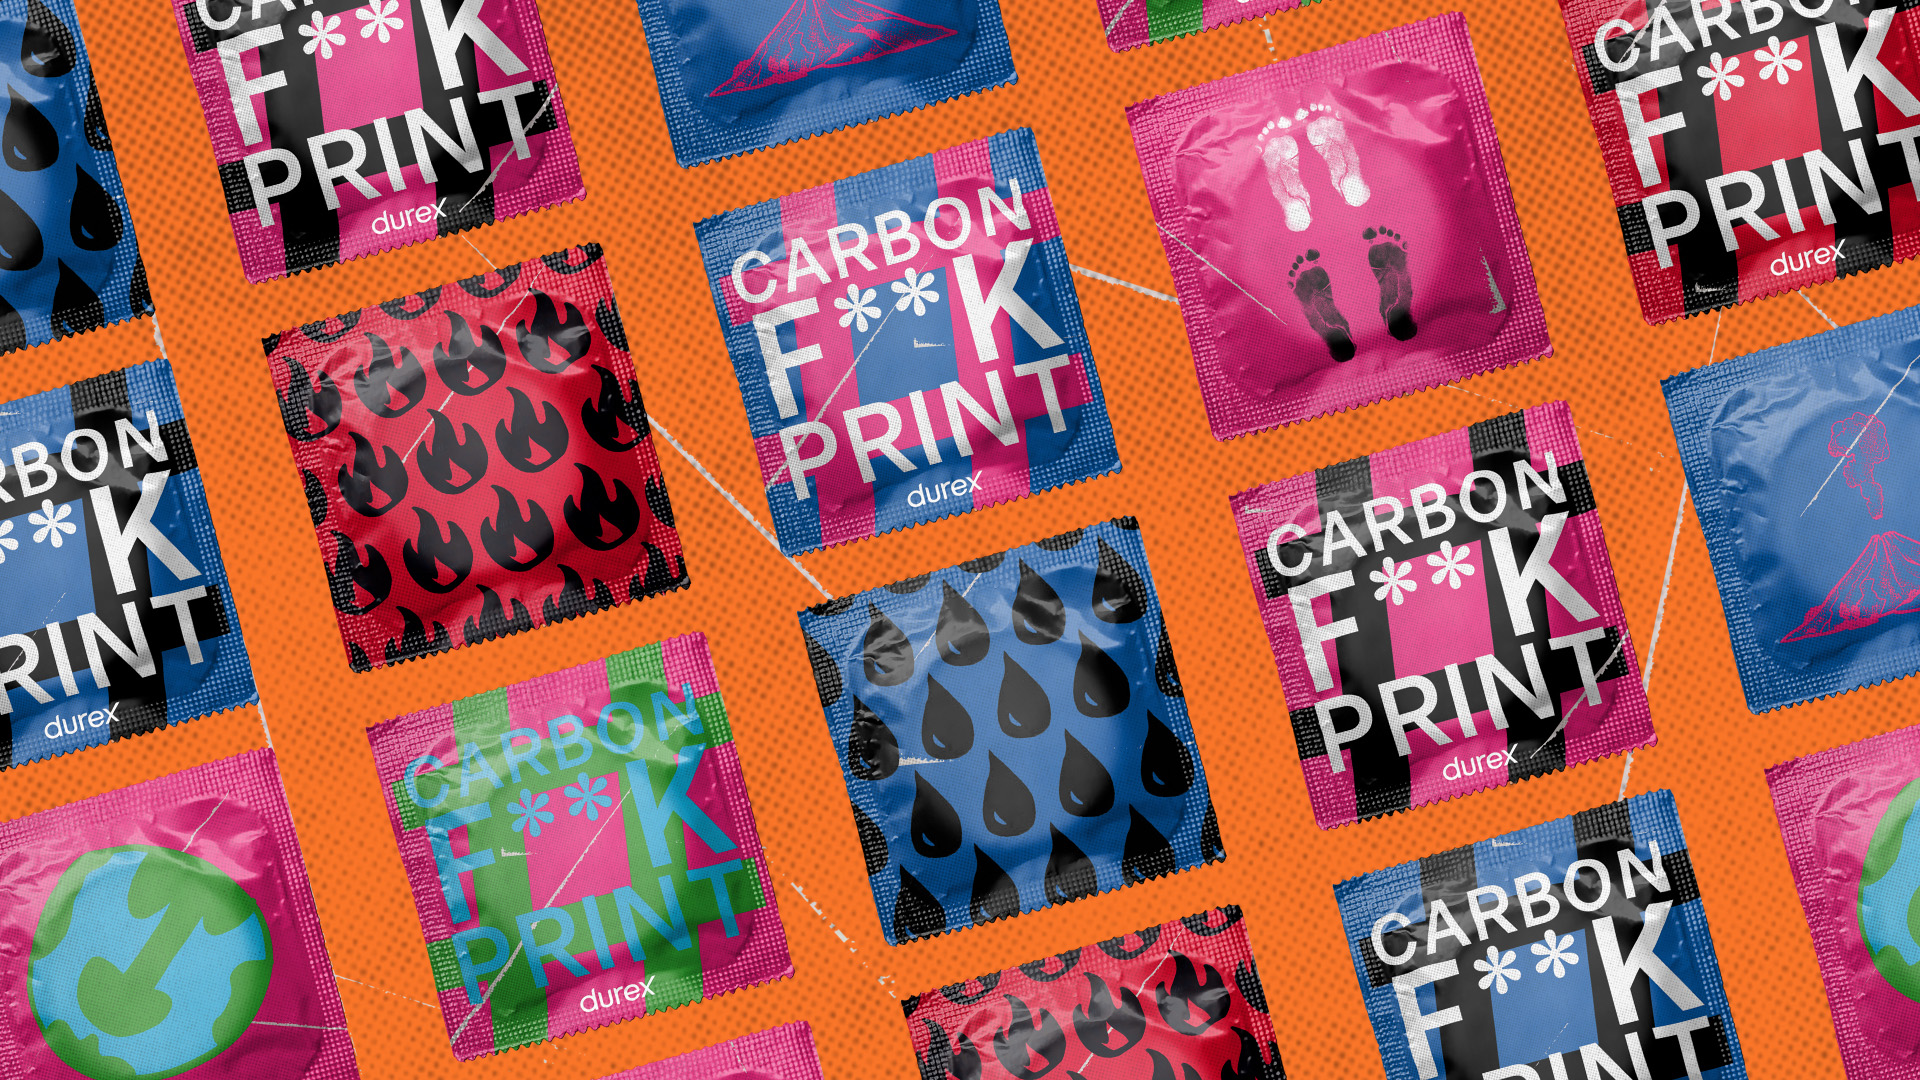 Graphic Design work showing the #CarbonF**kprint range of condoms.